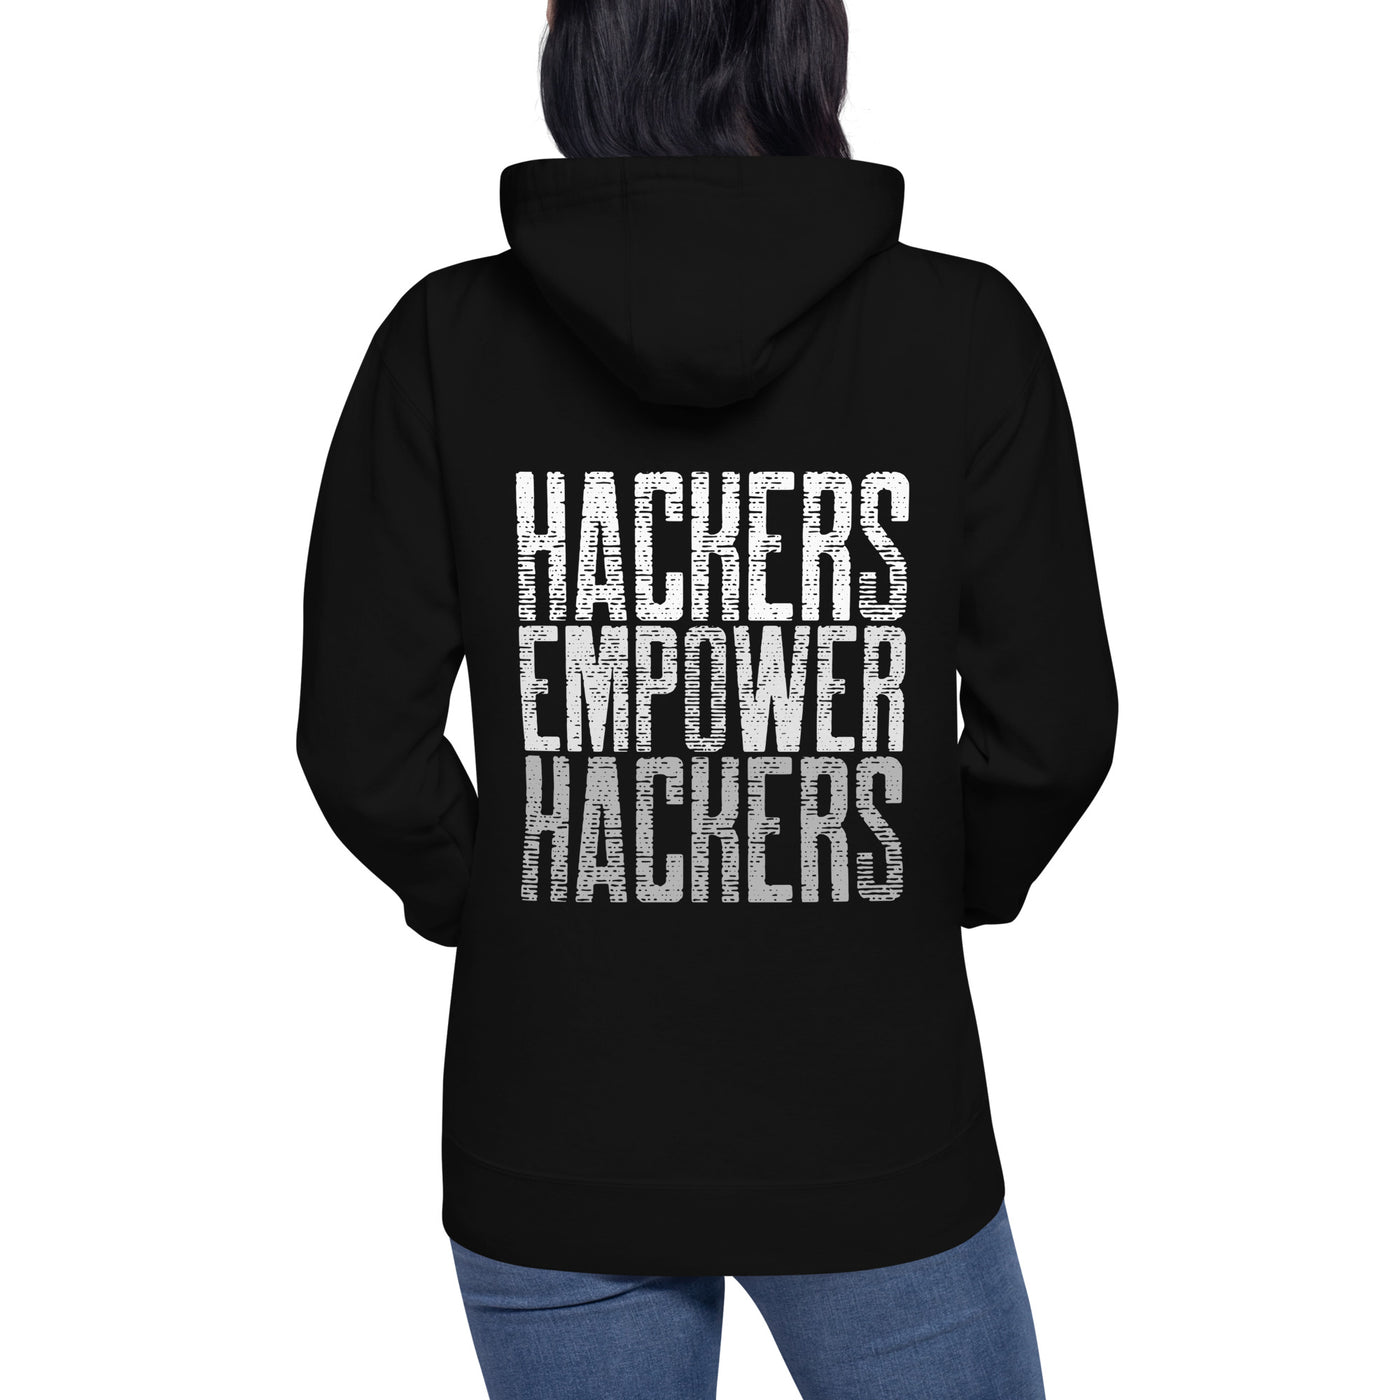 Hackers Empower Hackers V1 - Unisex Hoodie ( Back Print )